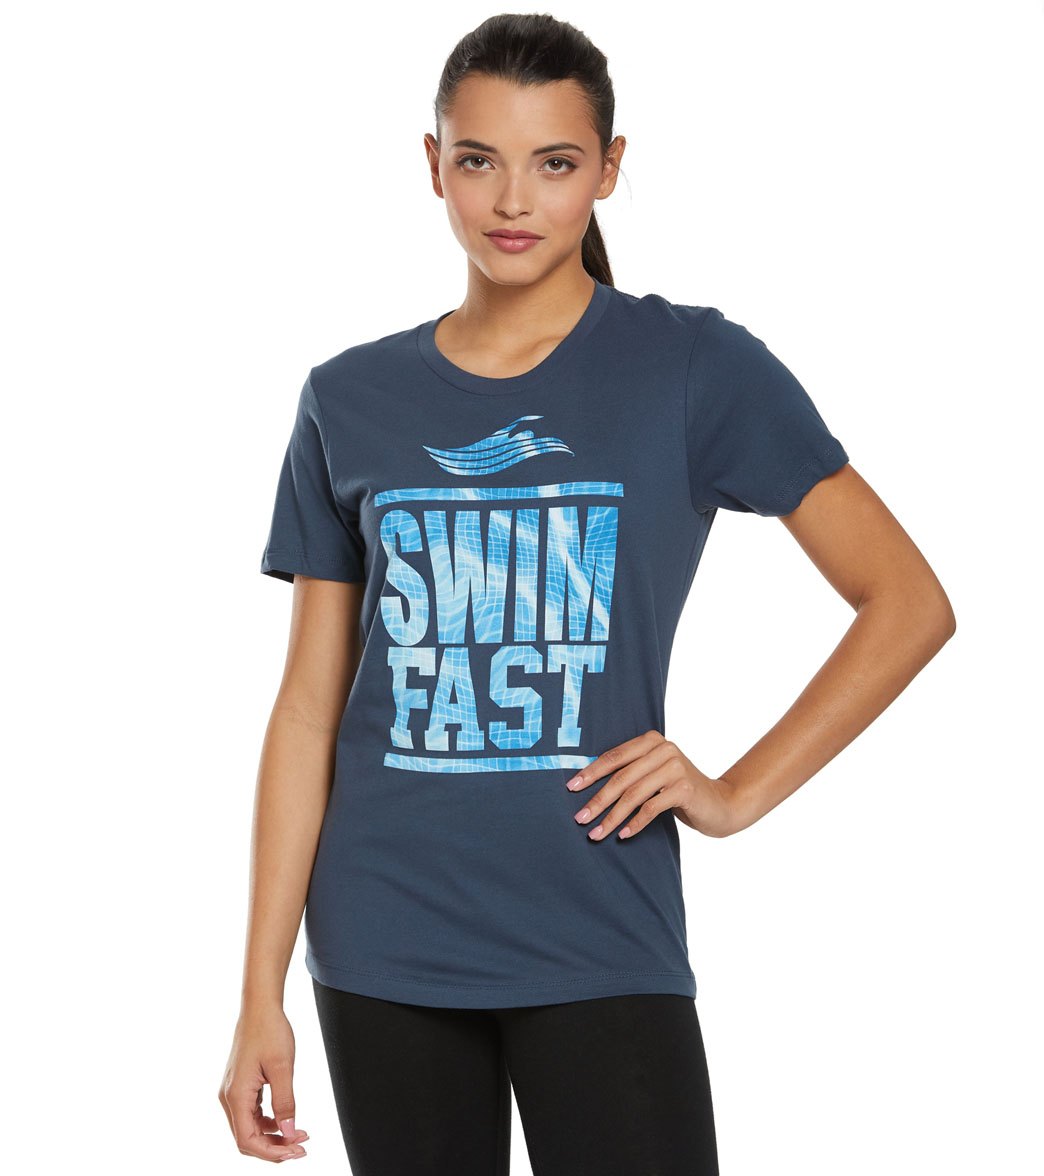 U.s. Masters Swimming Usms Women's Swim Fast Crew Neck T-Shirt - Navy Large Cotton - Swimoutlet.com